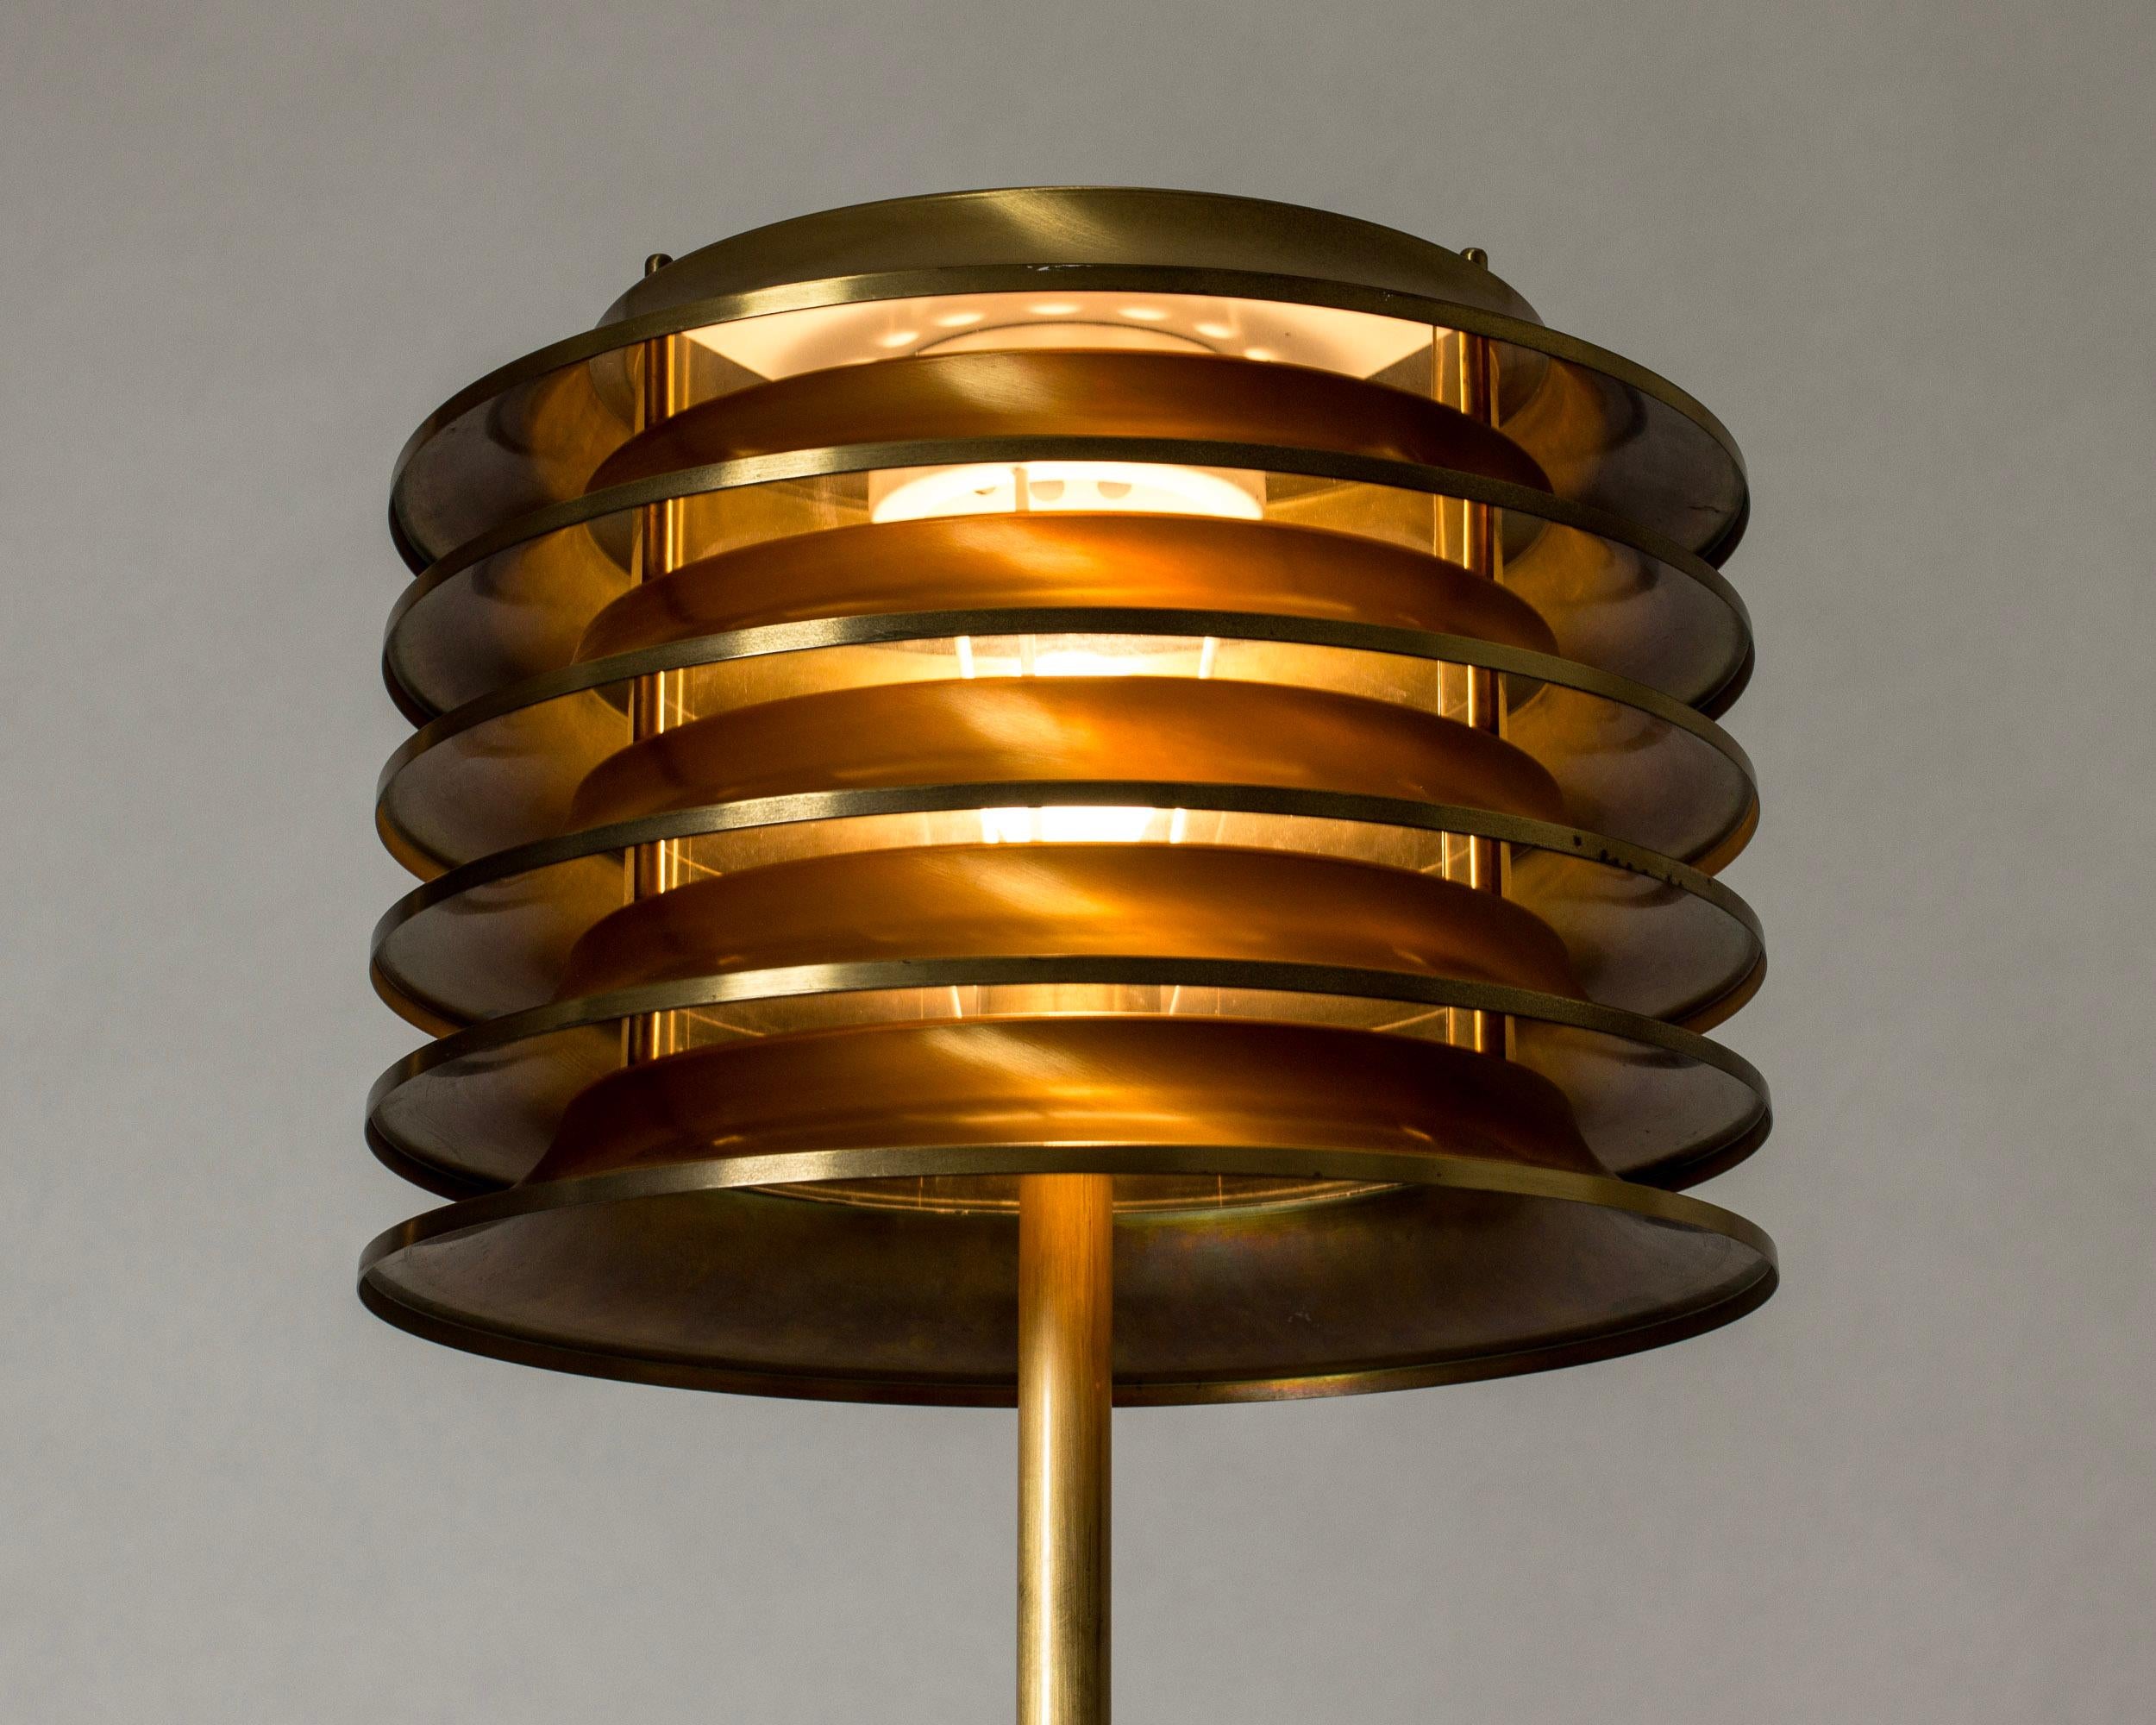 Scandinavian Modern Finnish Midcentury Modern Brass Floor Lamp by Kai Ruokonen for Orno, 1970s For Sale